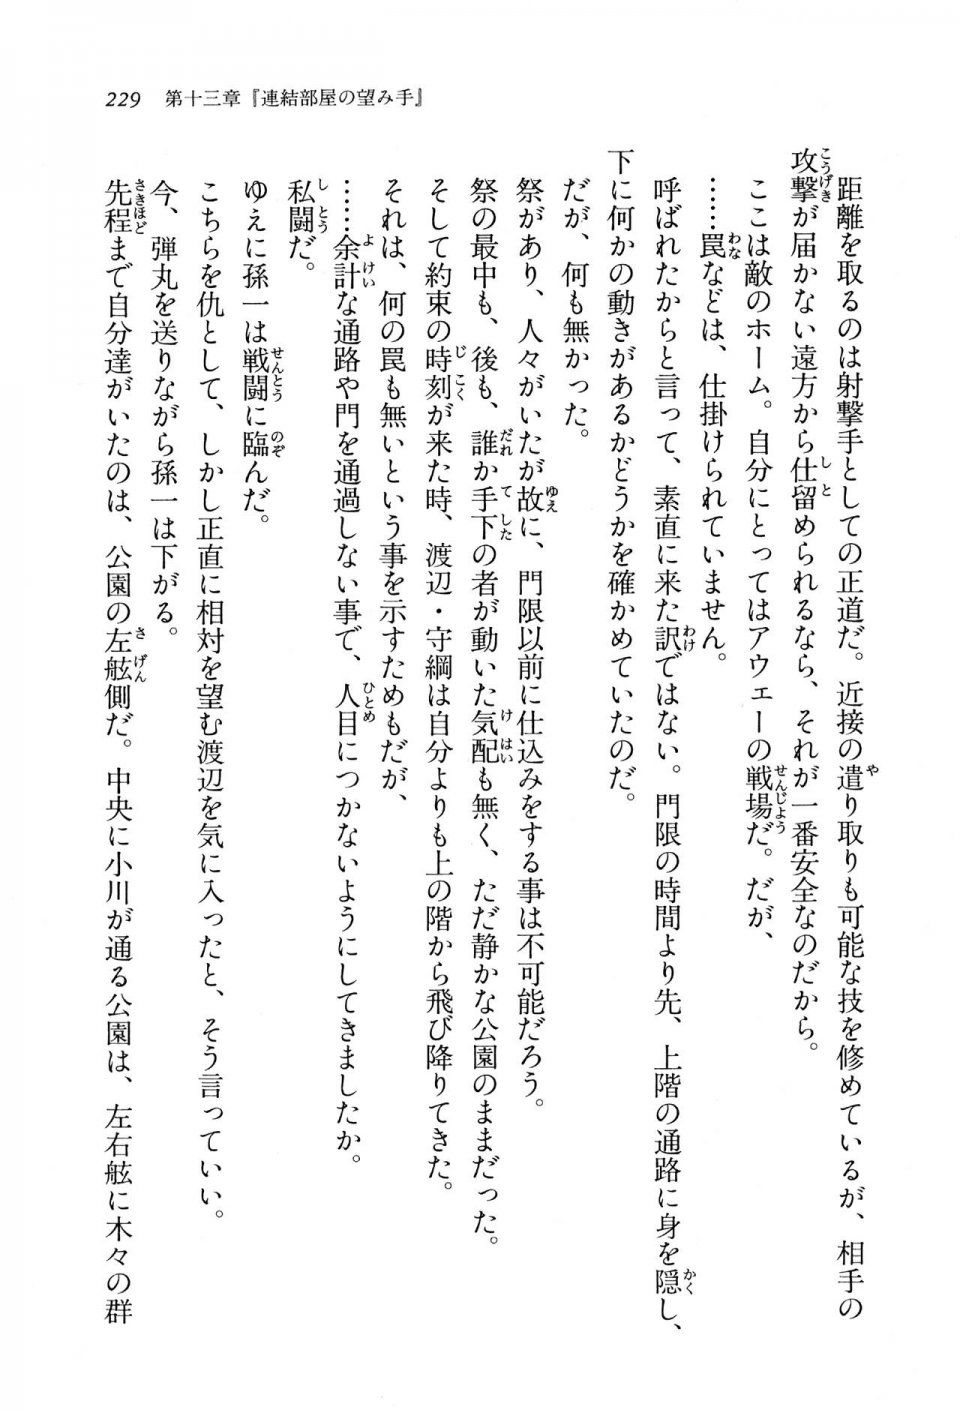 Kyoukai Senjou no Horizon BD Special Mininovel Vol 8(4B) - Photo #233